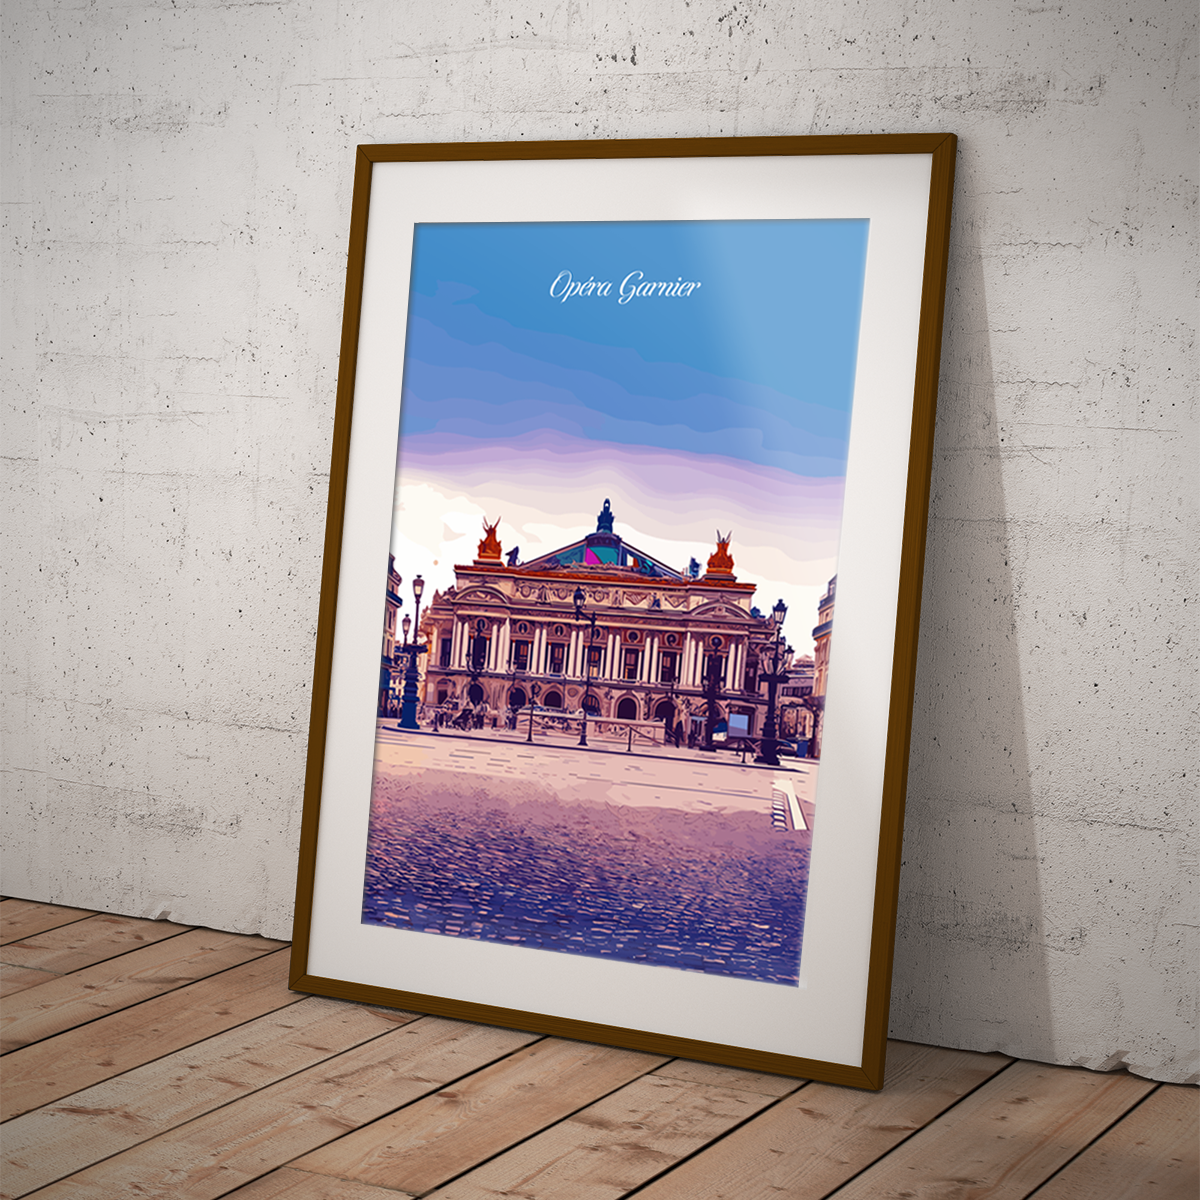 Paris - Opéra Garnier poster by bon voyage design